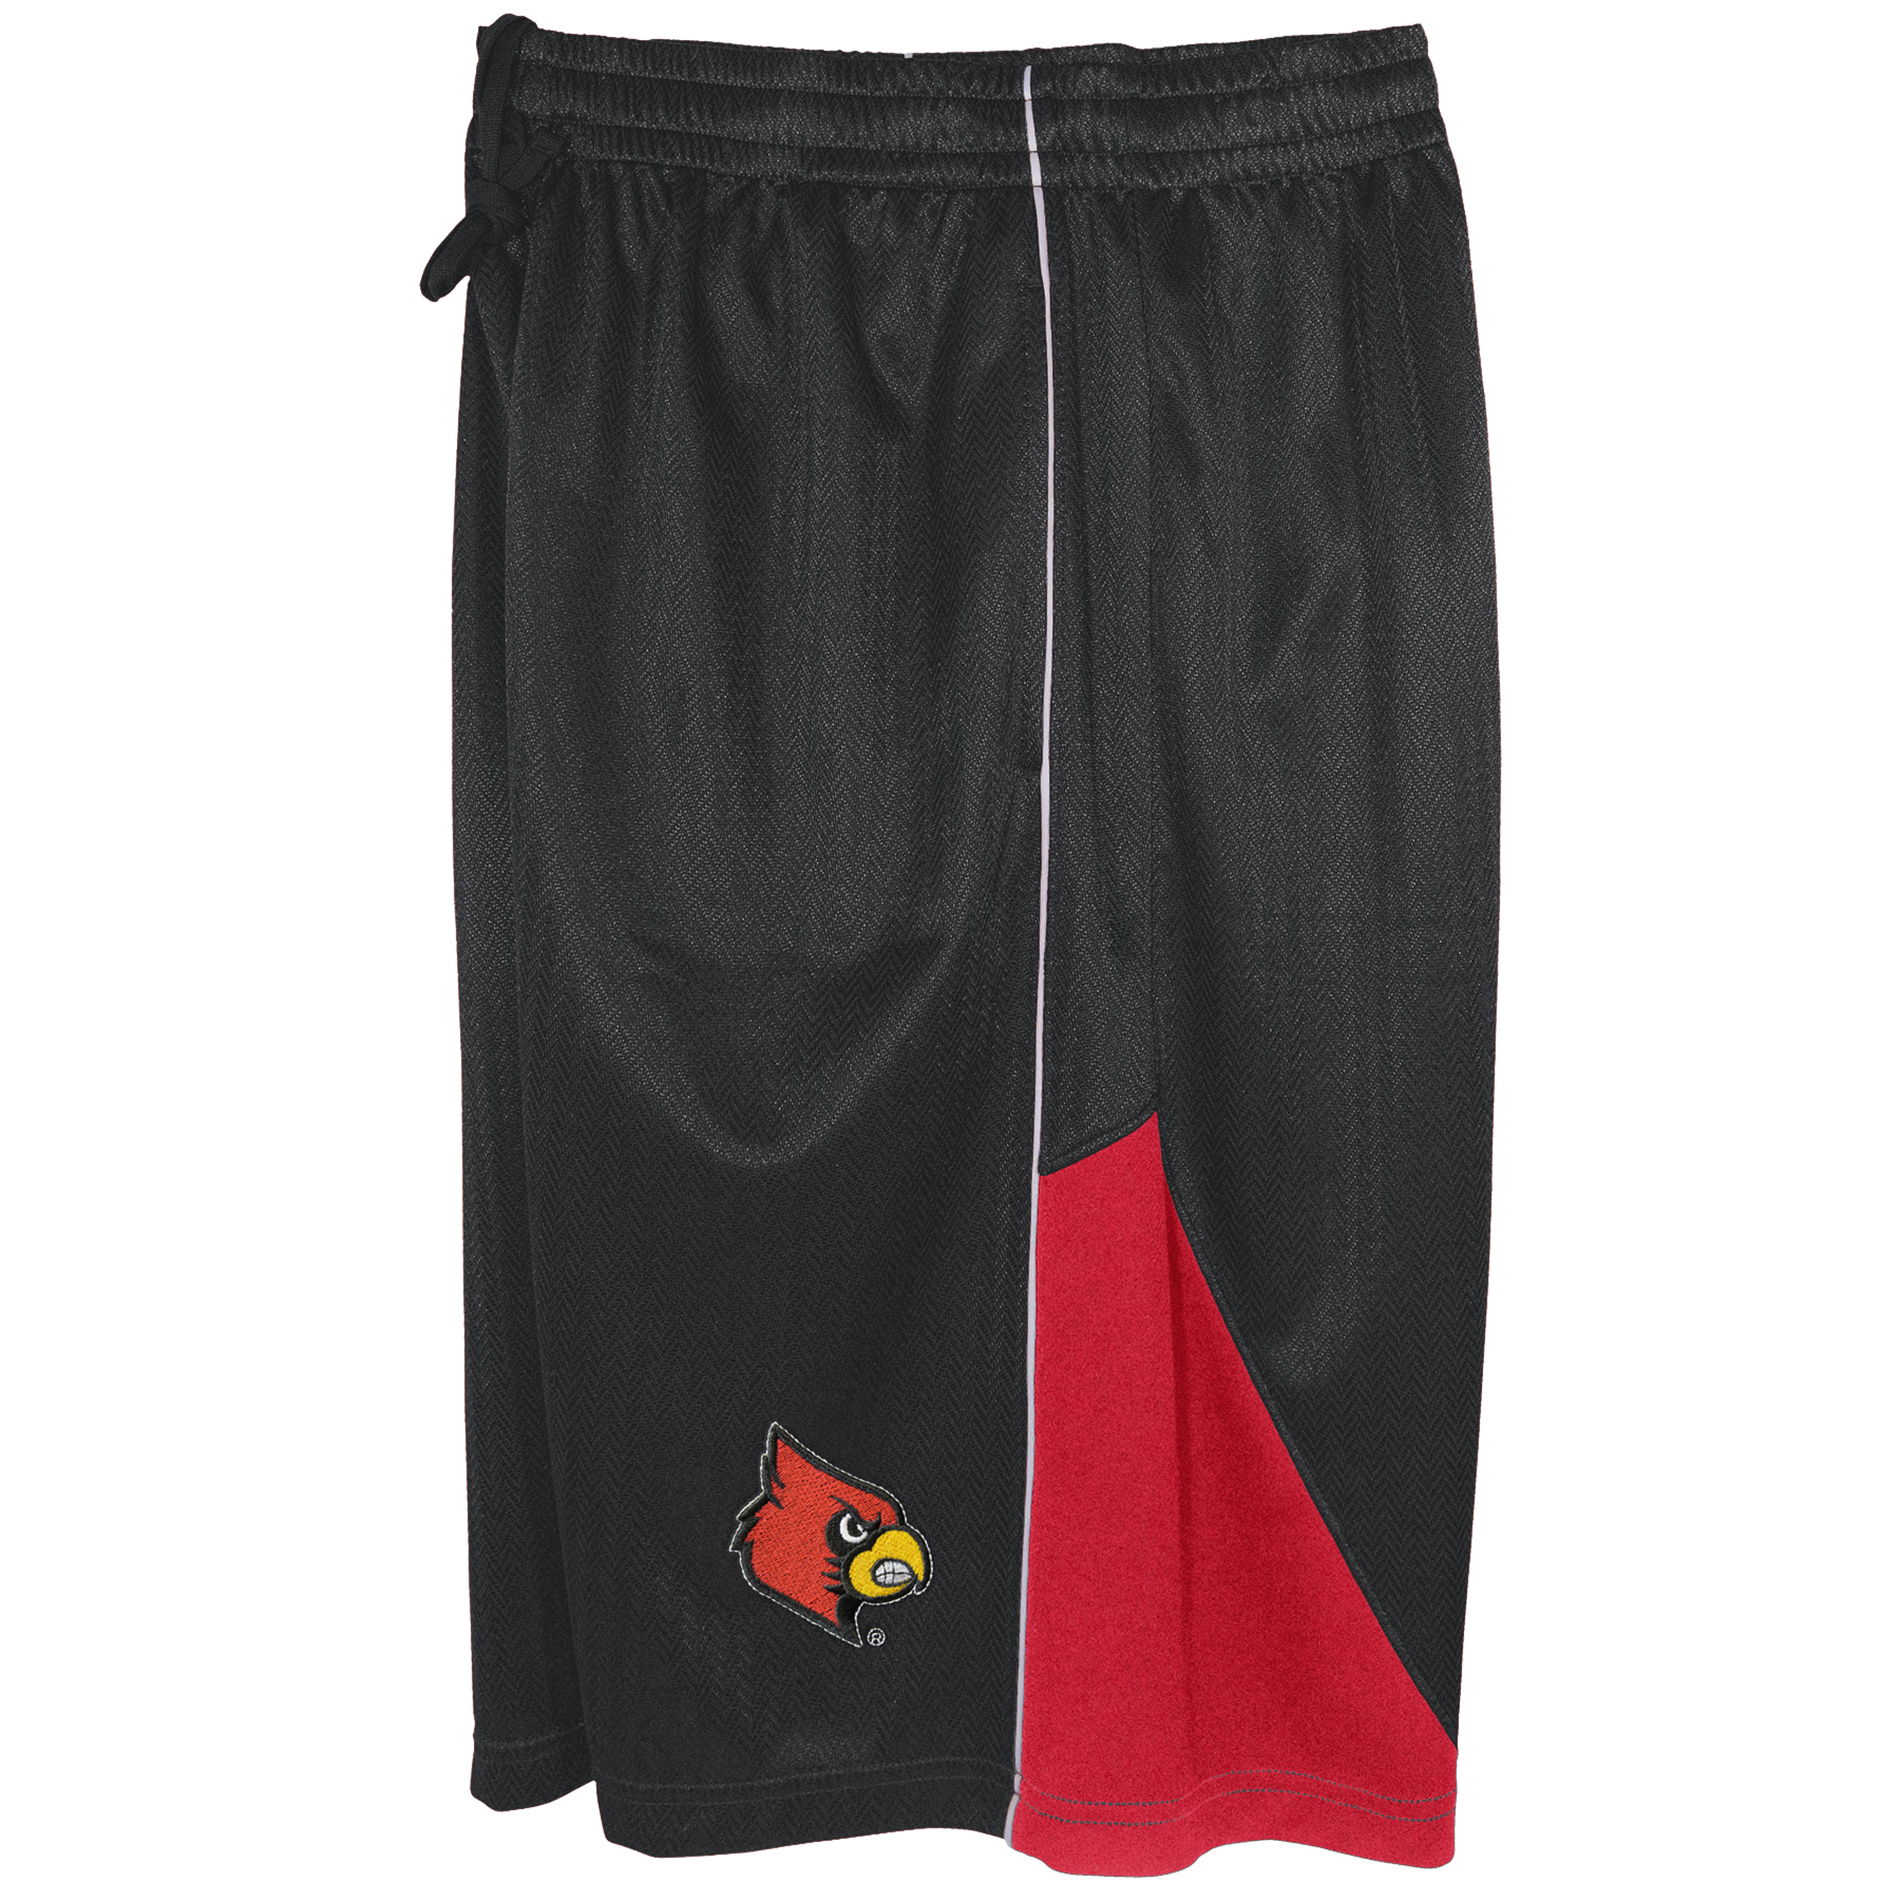 NCAA Mens' University of Louisville Cardinals Basketball Shorts